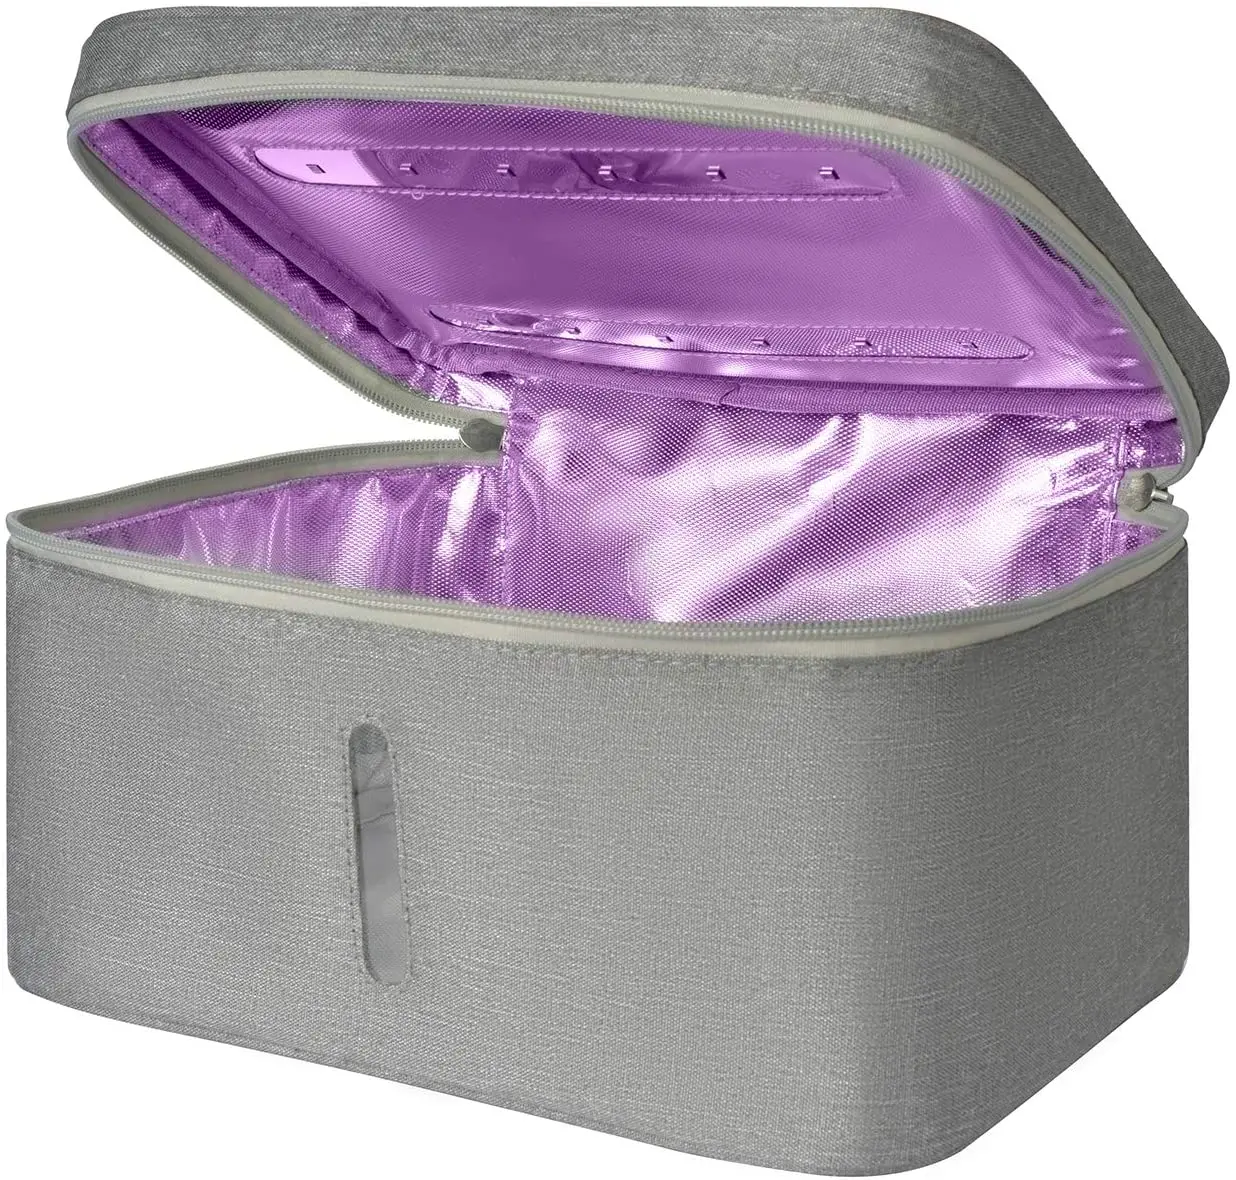 Hope C+ UV Sanitizer Bag UV LED Sanitizing box Portable UVC light cleaner 265 nm LED UV Sterilizer, Kill 99.9%in 5 minutes